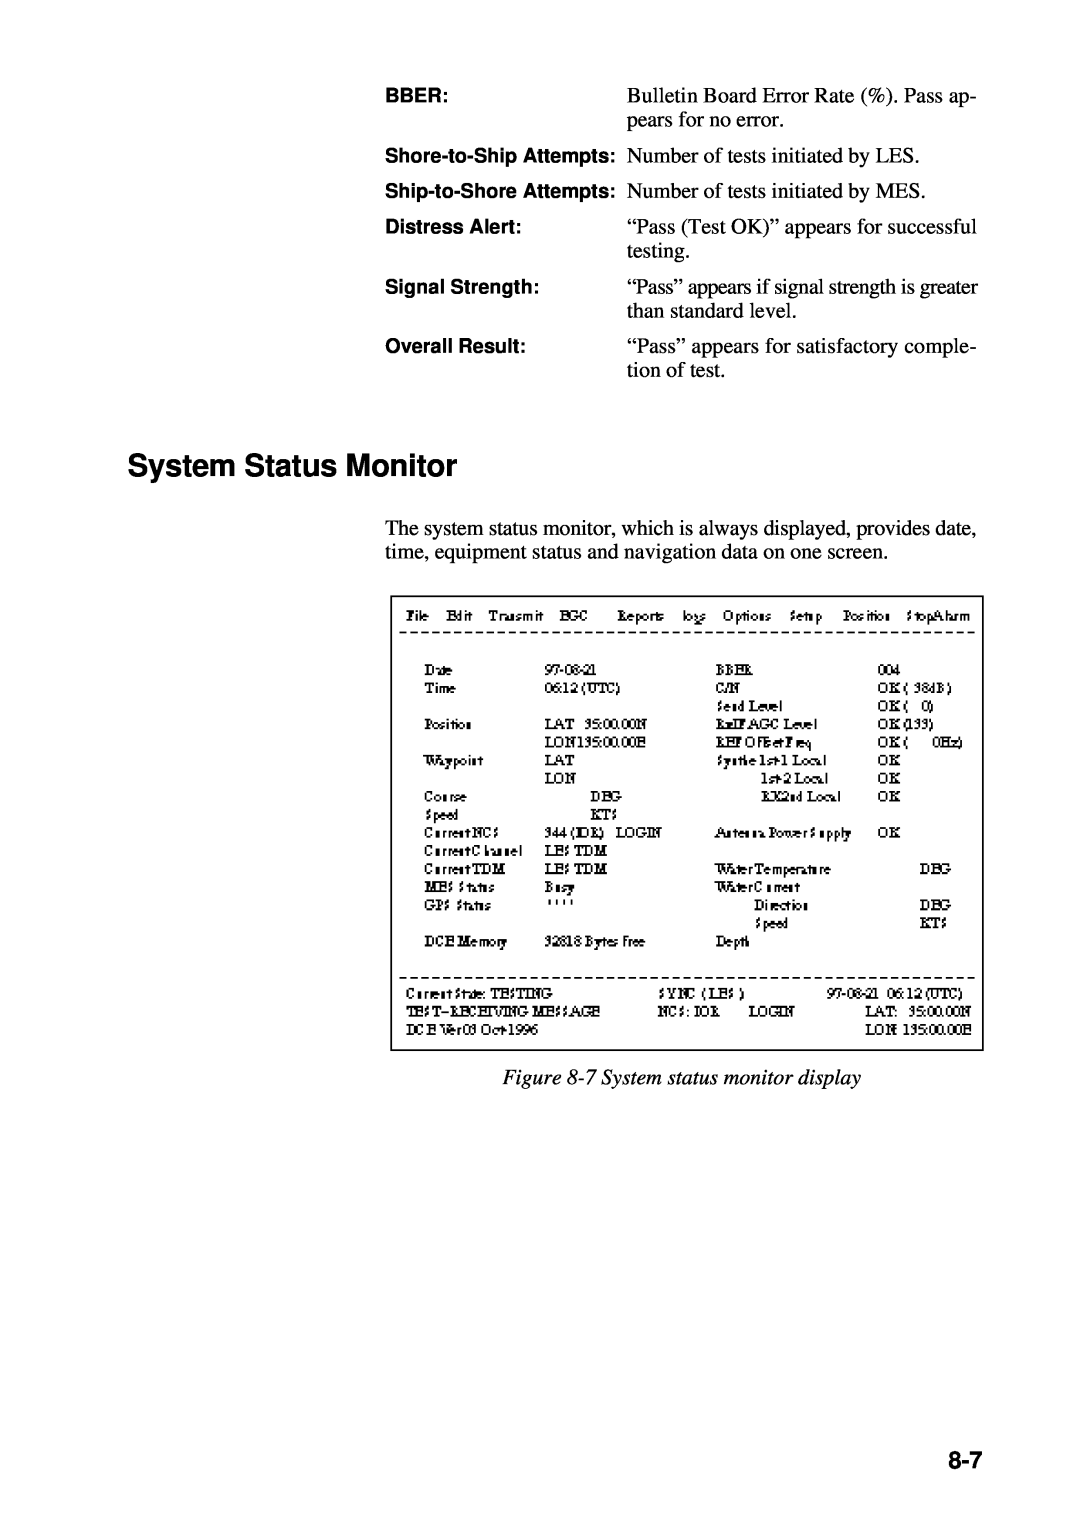 Furuno RC-1500-1T manual System Status Monitor, 7 System status monitor display 